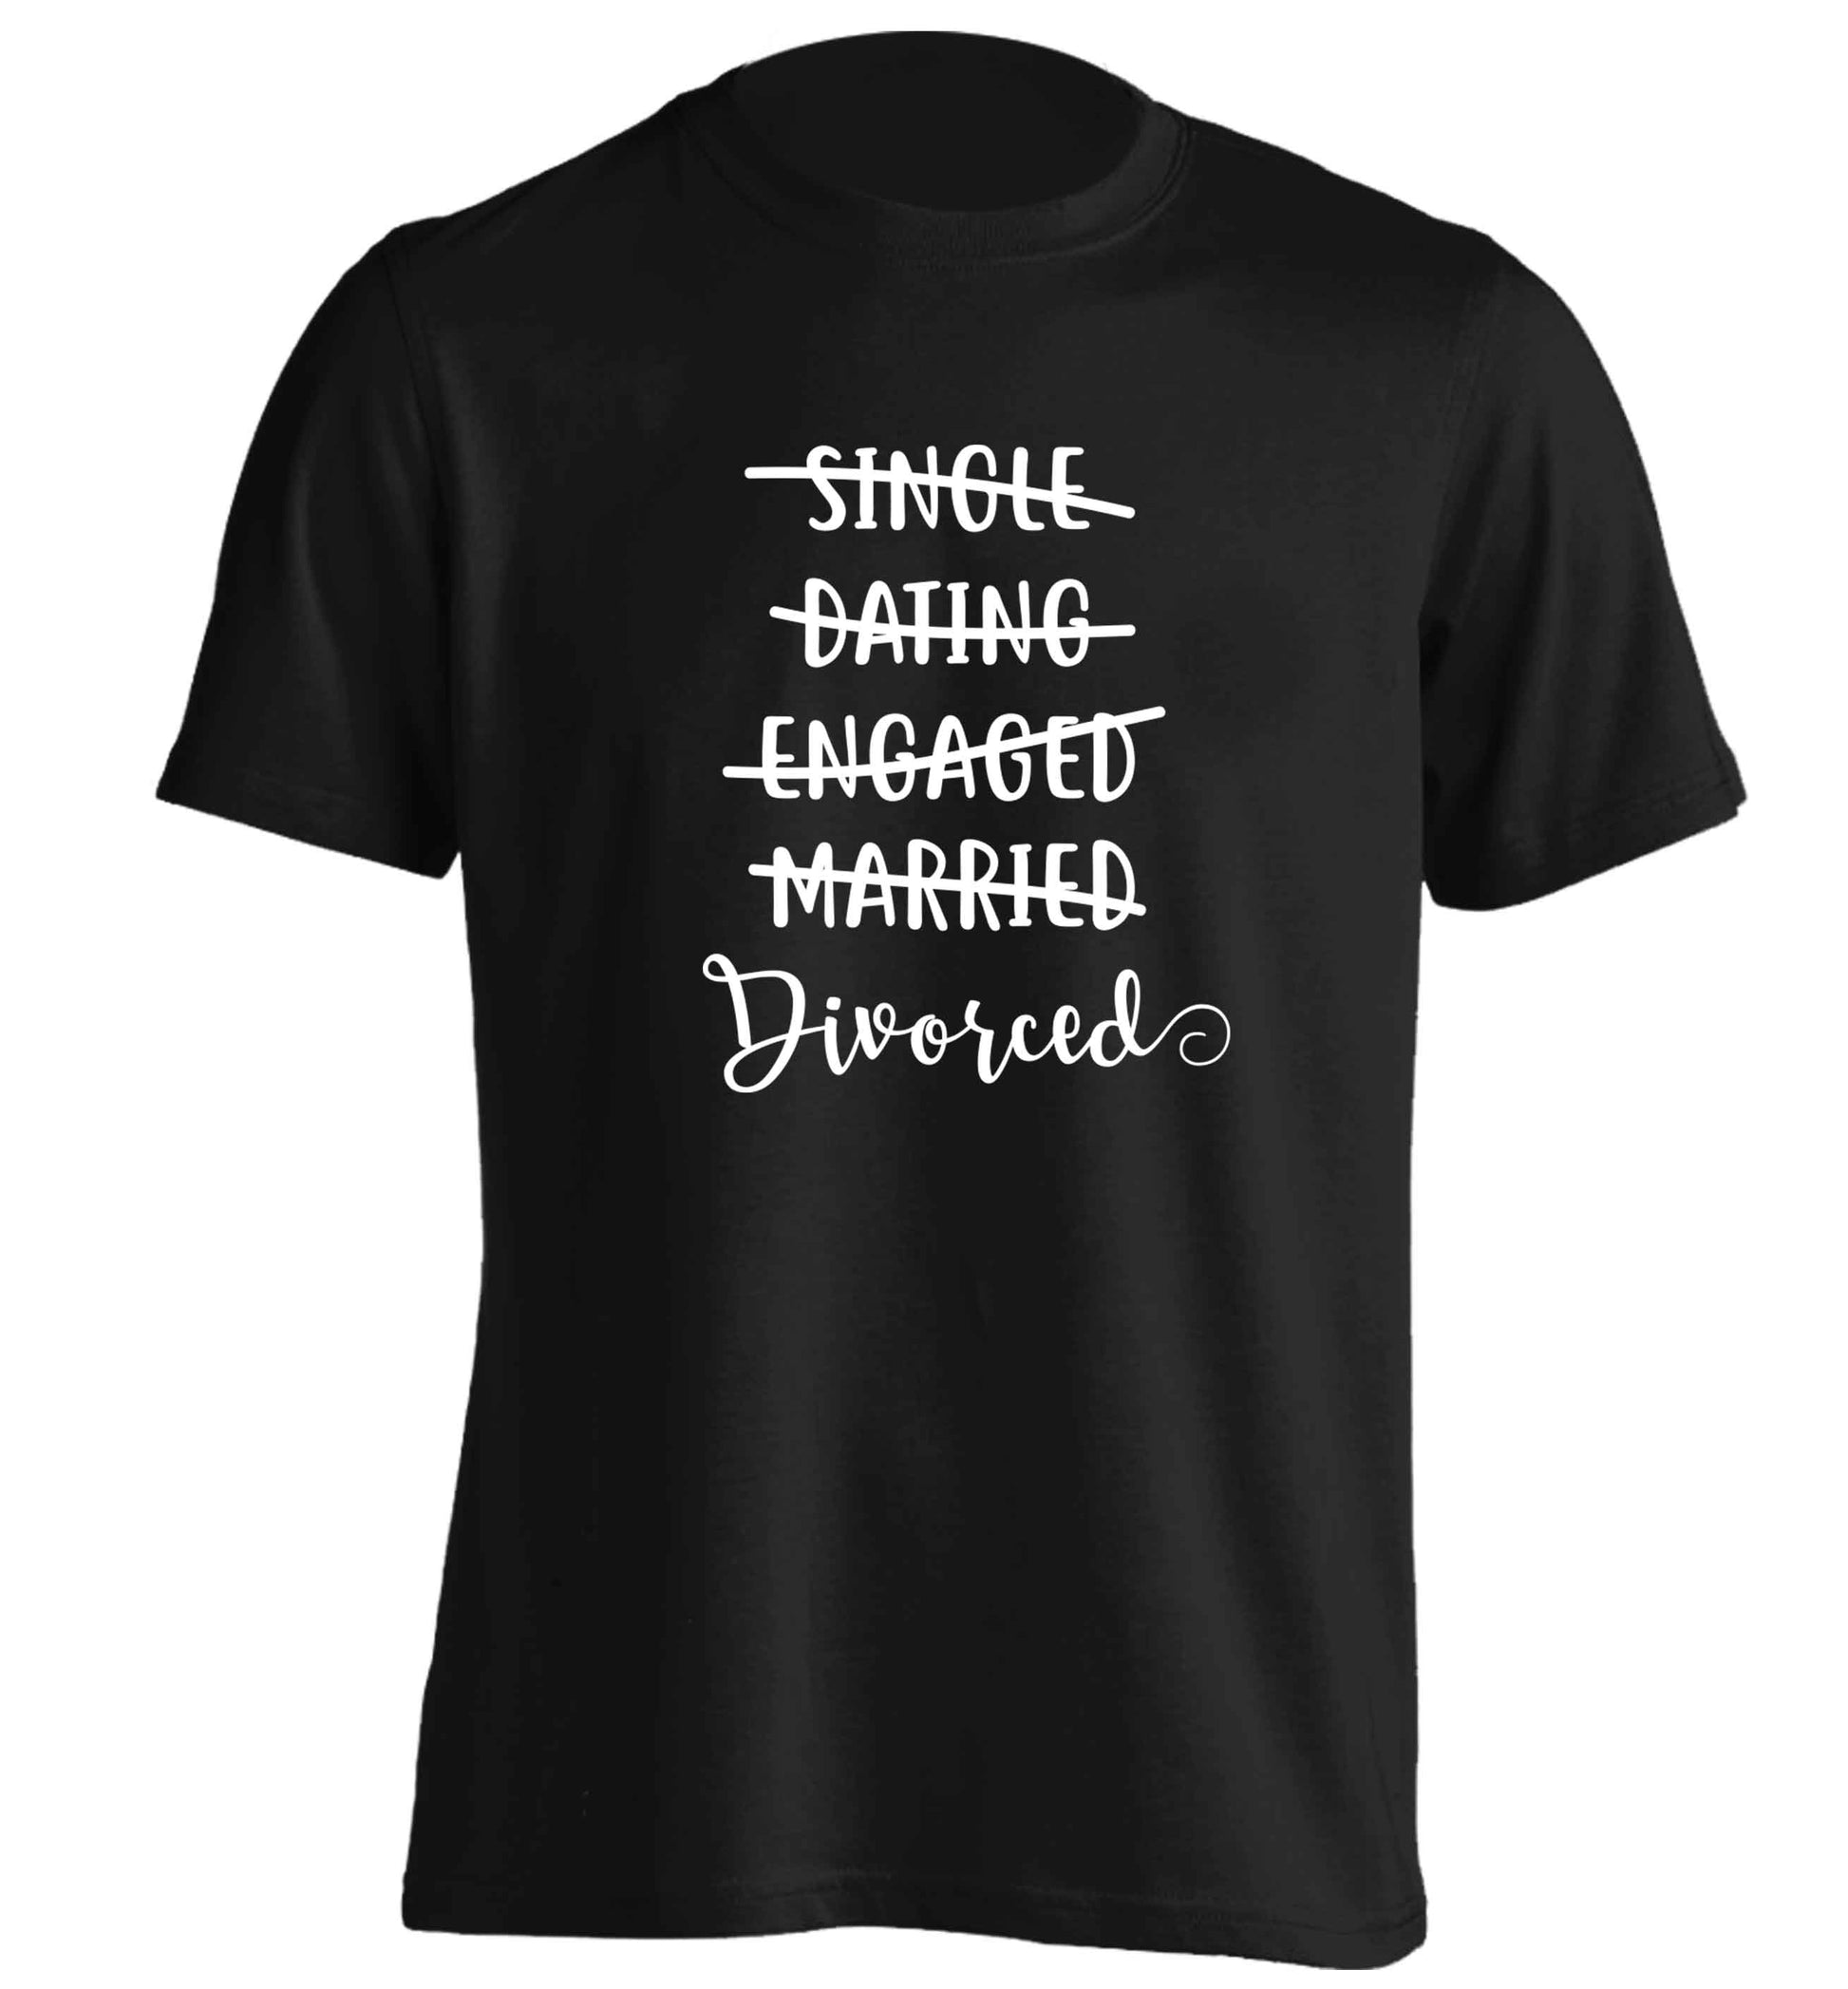 Single, dating, engaged, divorced adults unisex black Tshirt 2XL